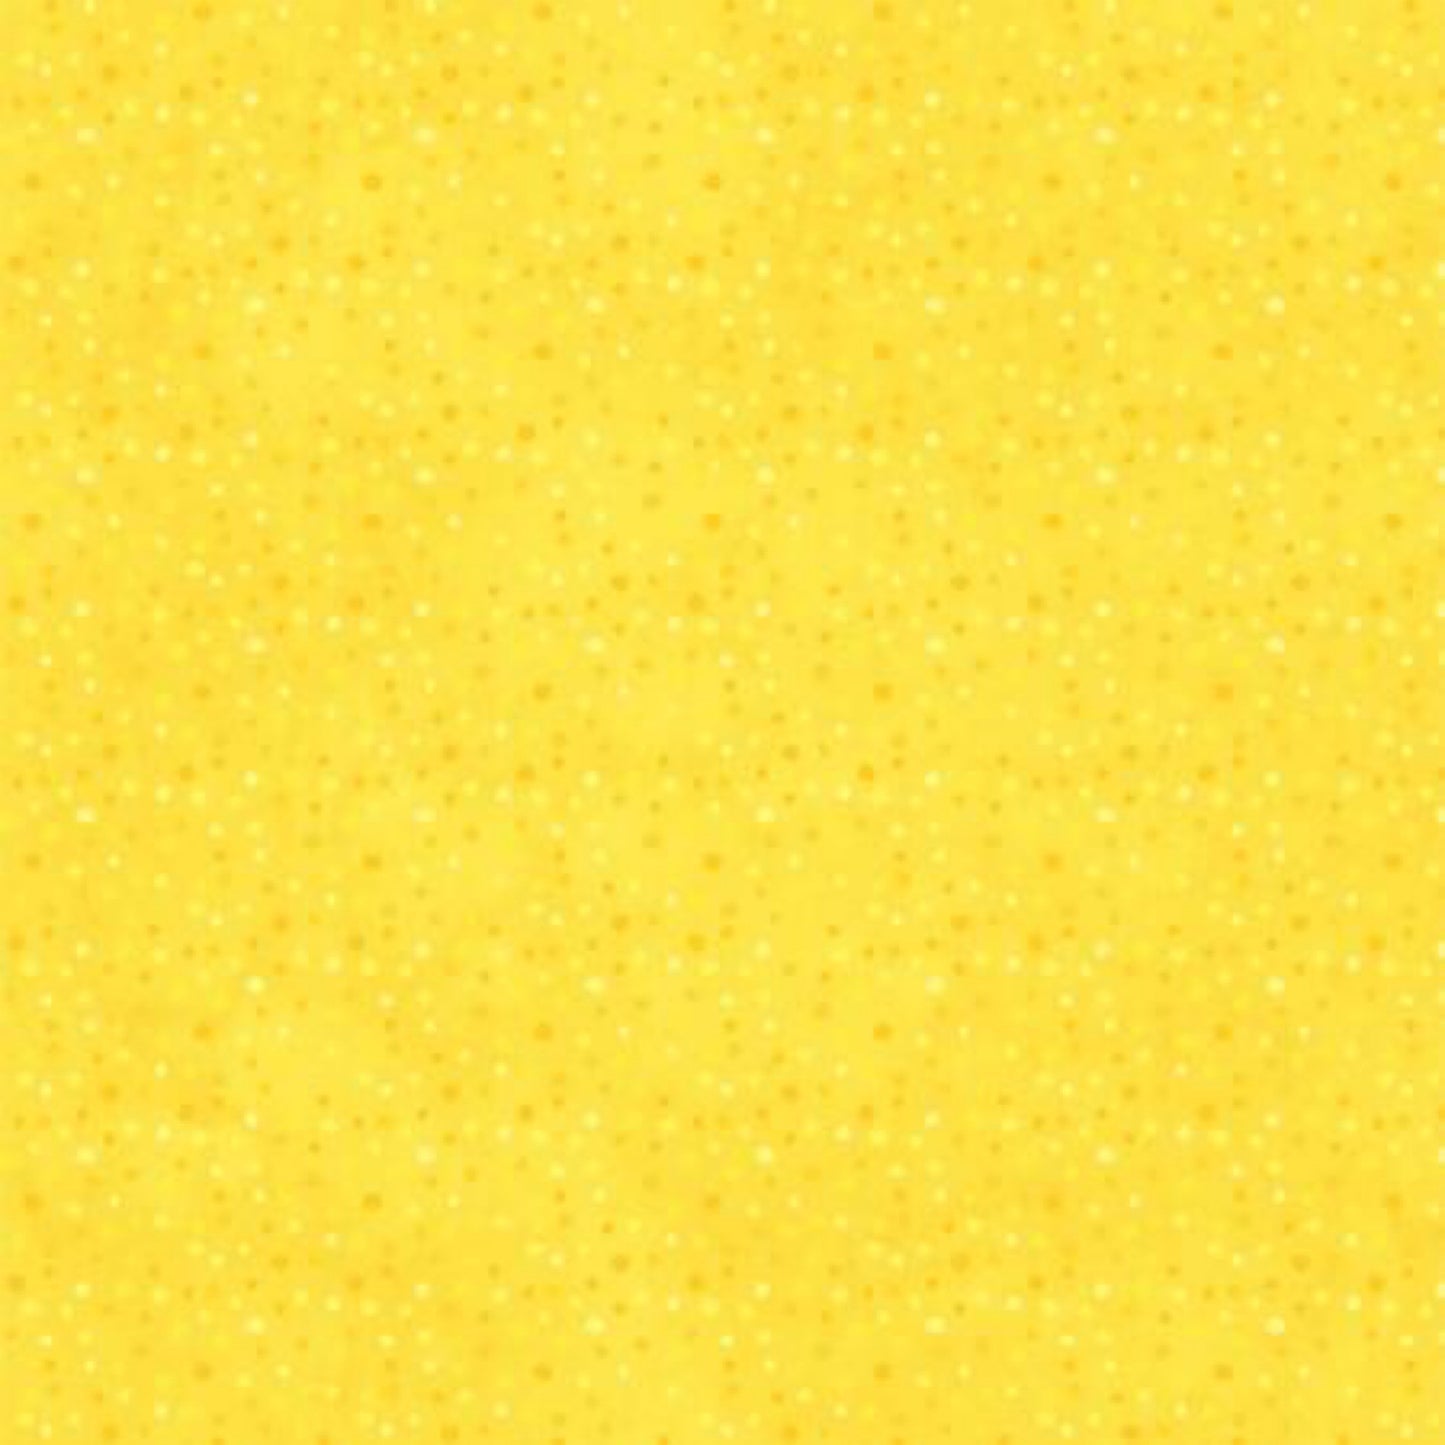 Wilmington Prints Essentials Petite Dots 39065-555 Bright Yellow